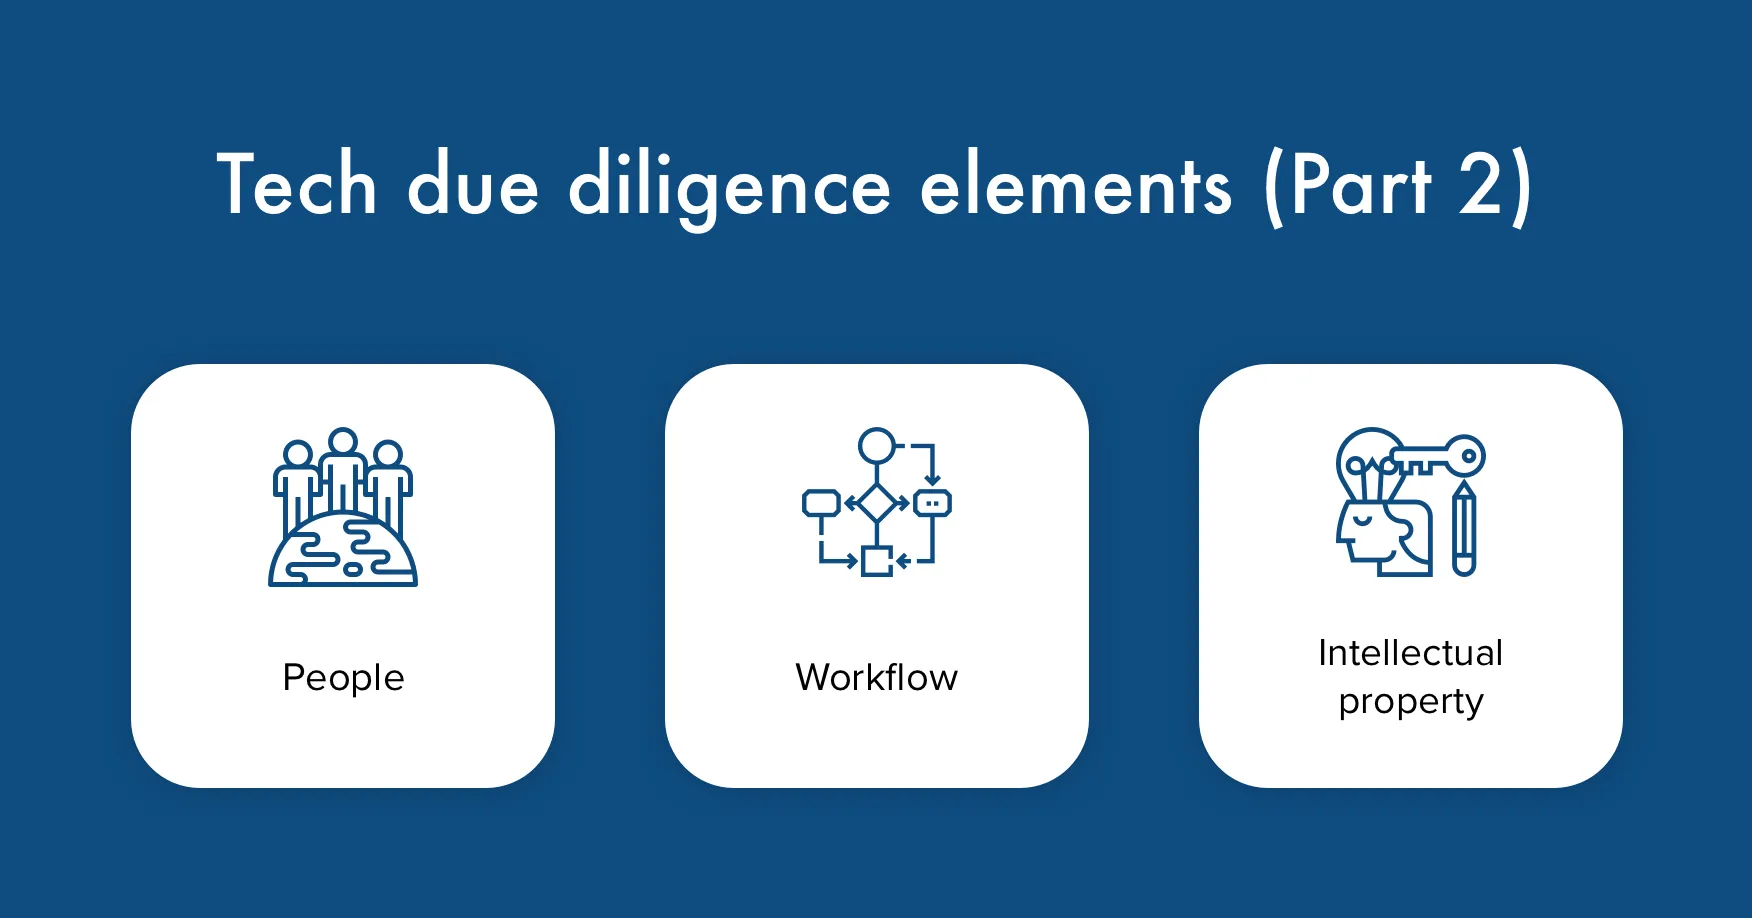 Technical due diligence elements (Part 2)